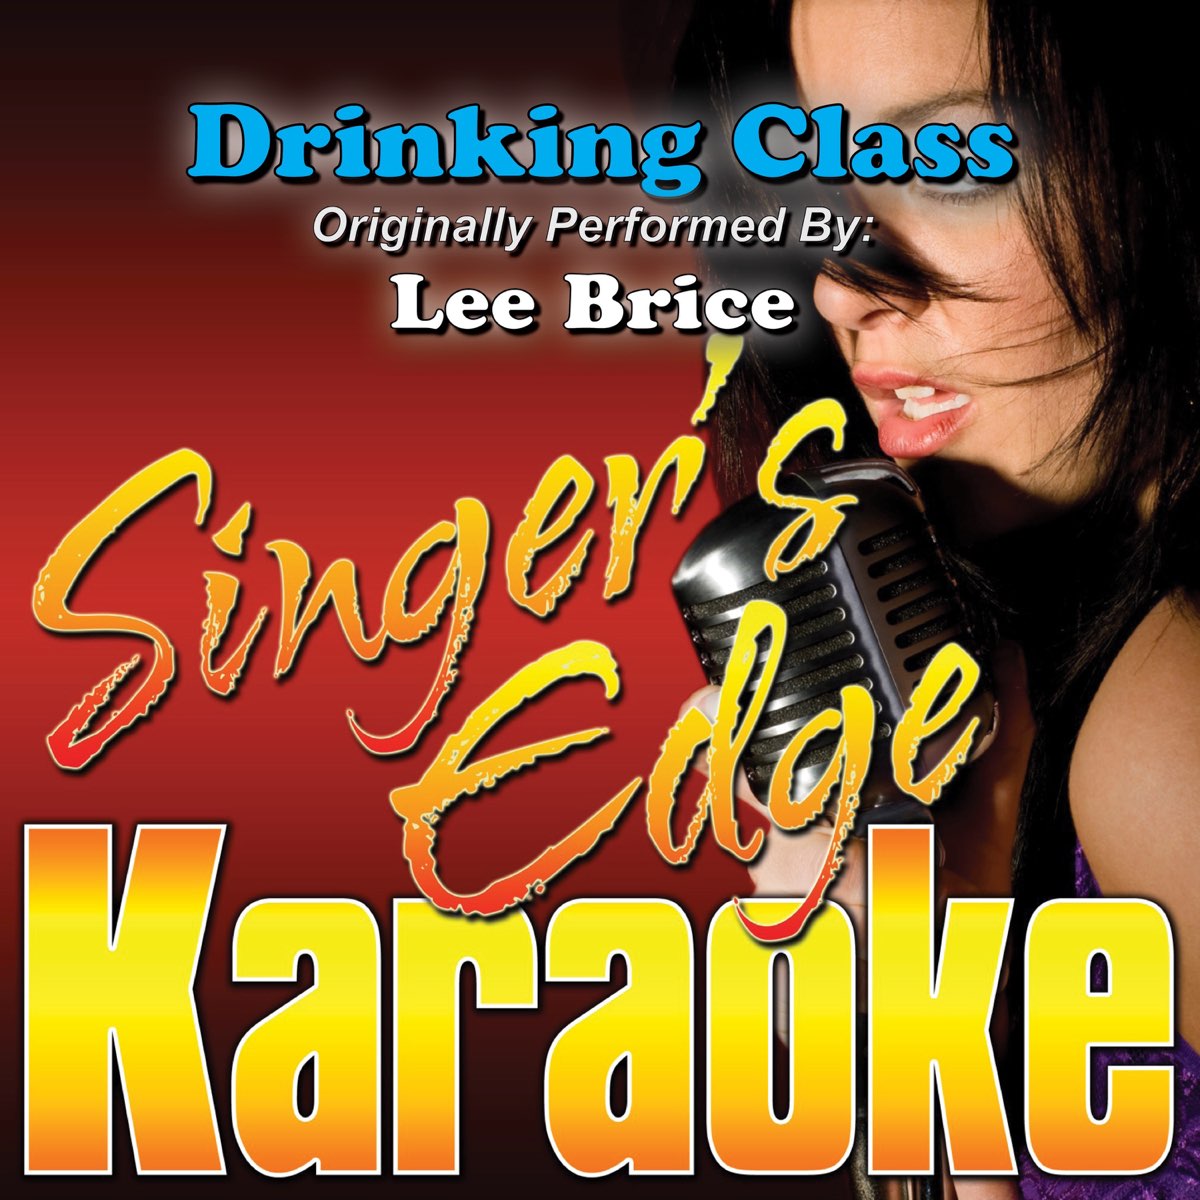 Drinking Class (Originally Performed By Lee Brice) [Karaoke Version] -  Single by Singer's Edge Karaoke on Apple Music